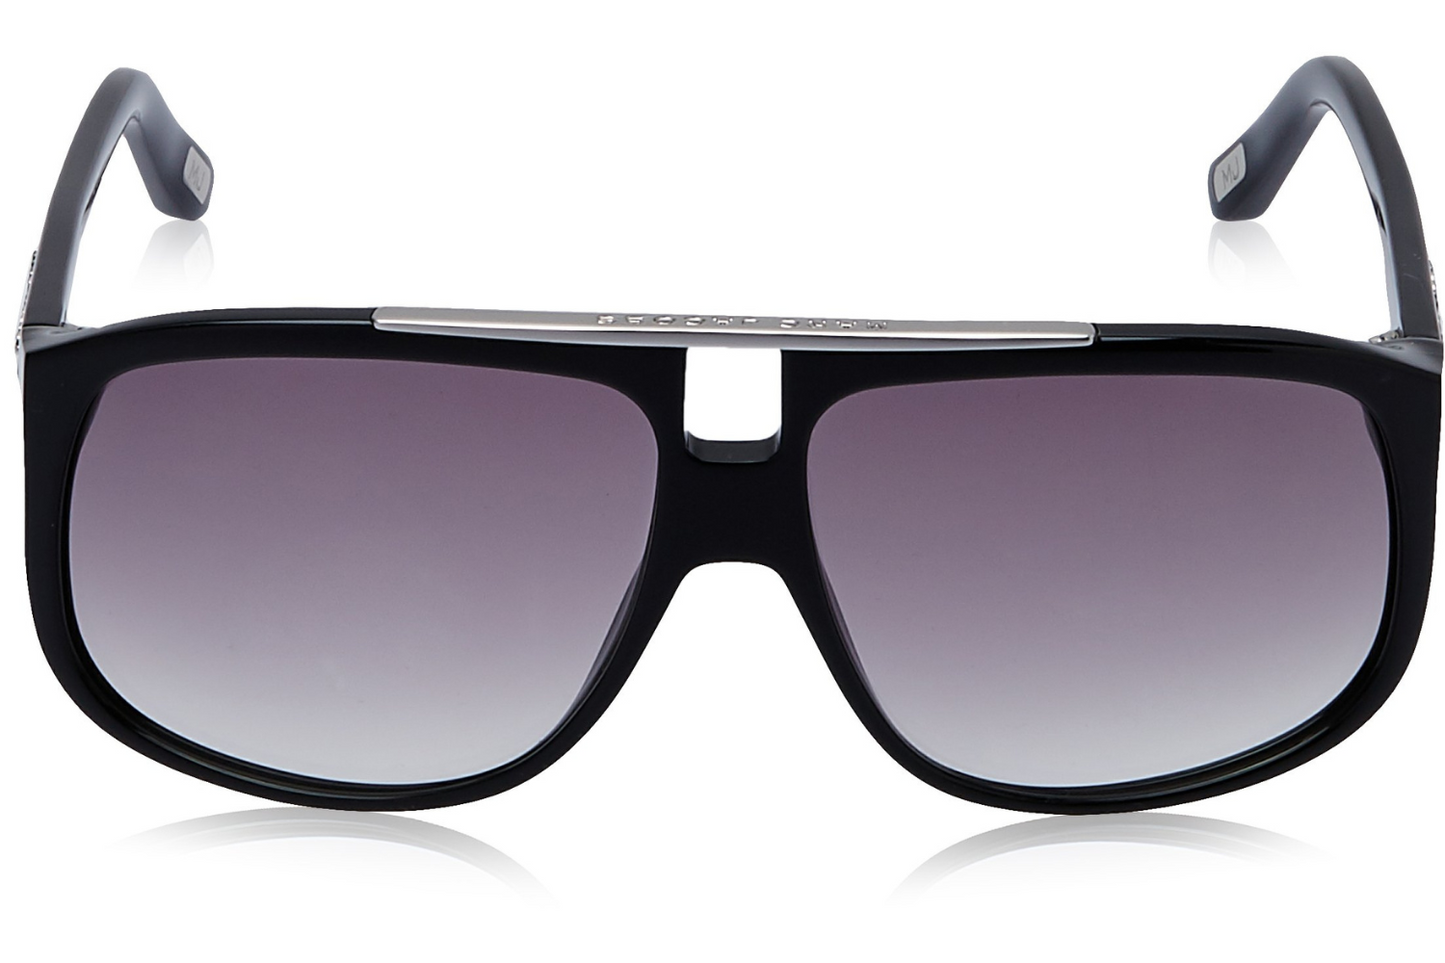 MARC JACOBS Sunglasses MARC 252 S	807 LF